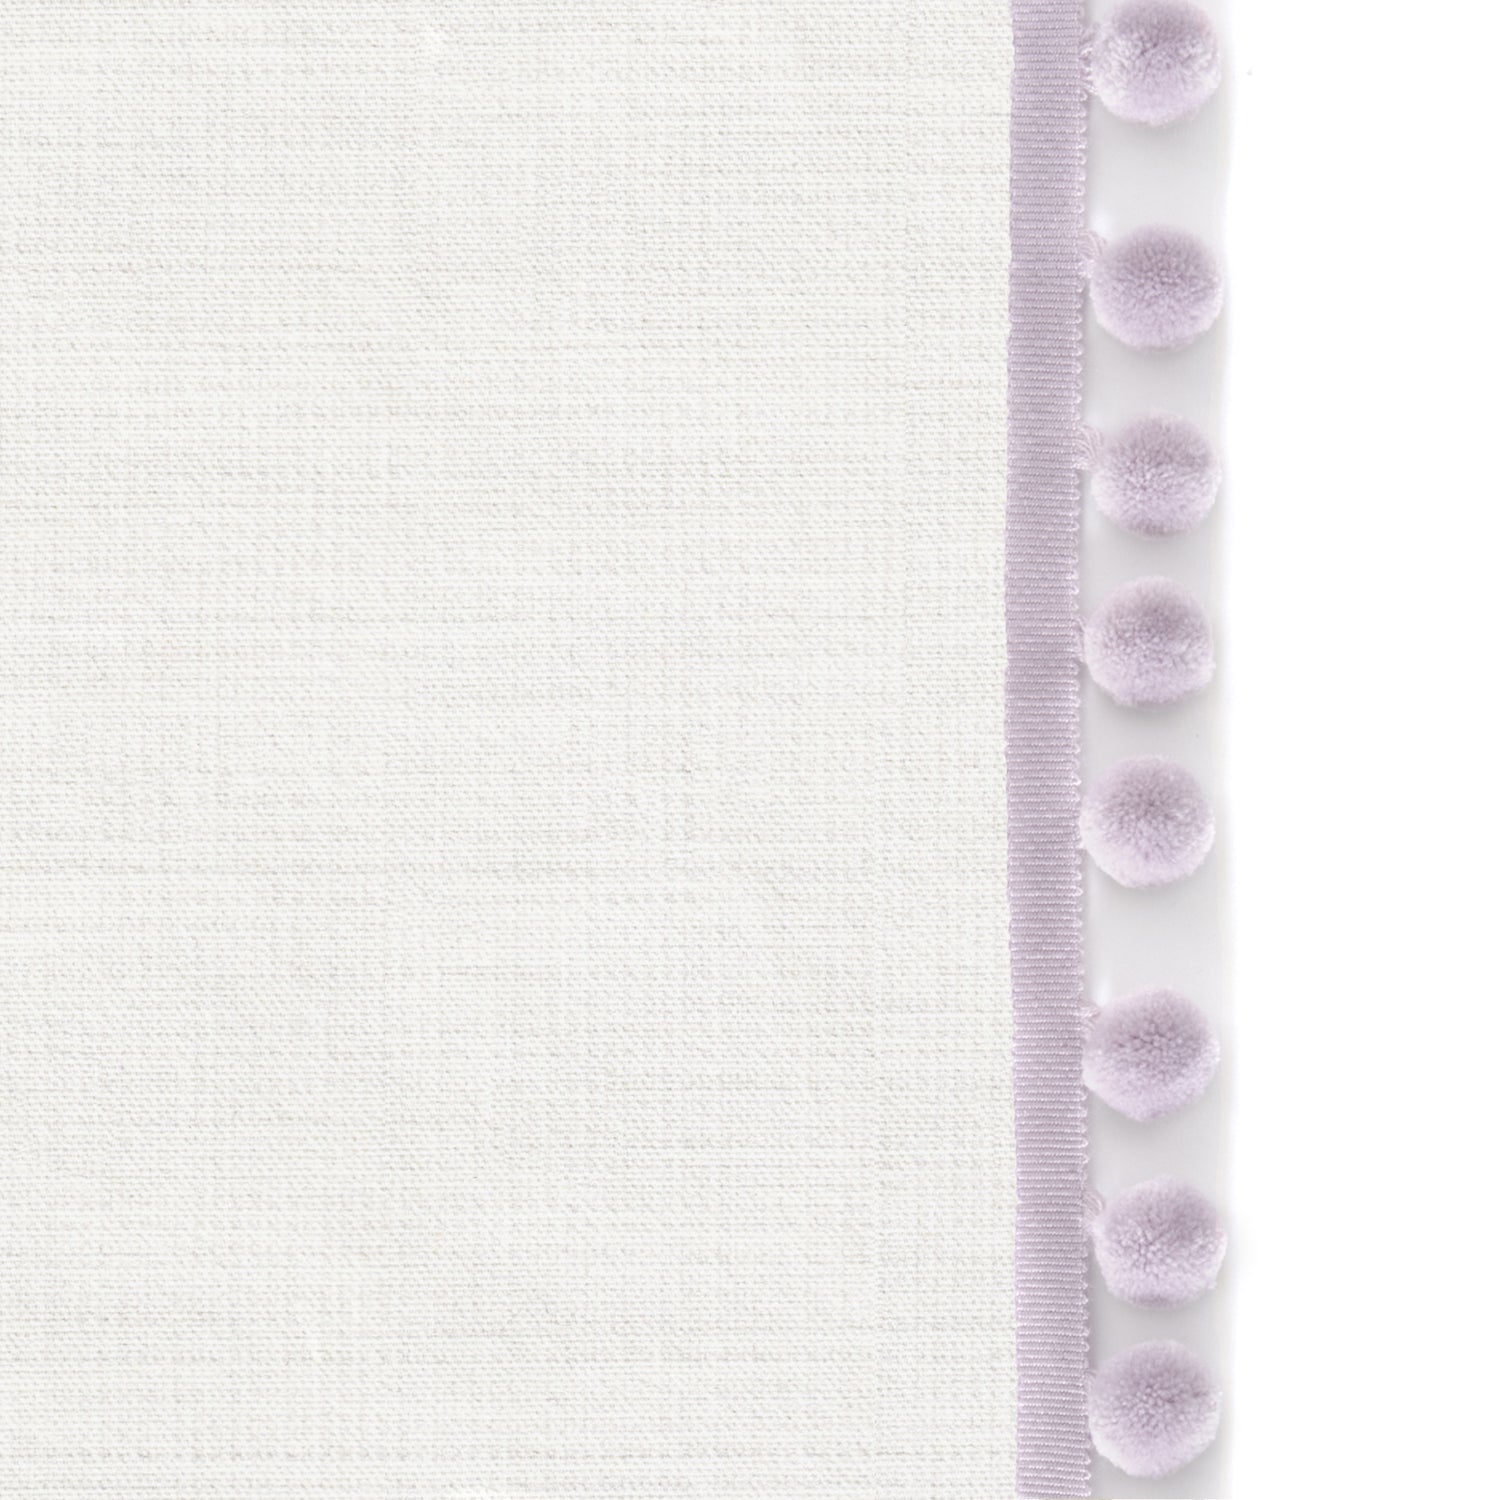 Upclose picture of Snow custom shower curtain with lilac pom pom trim